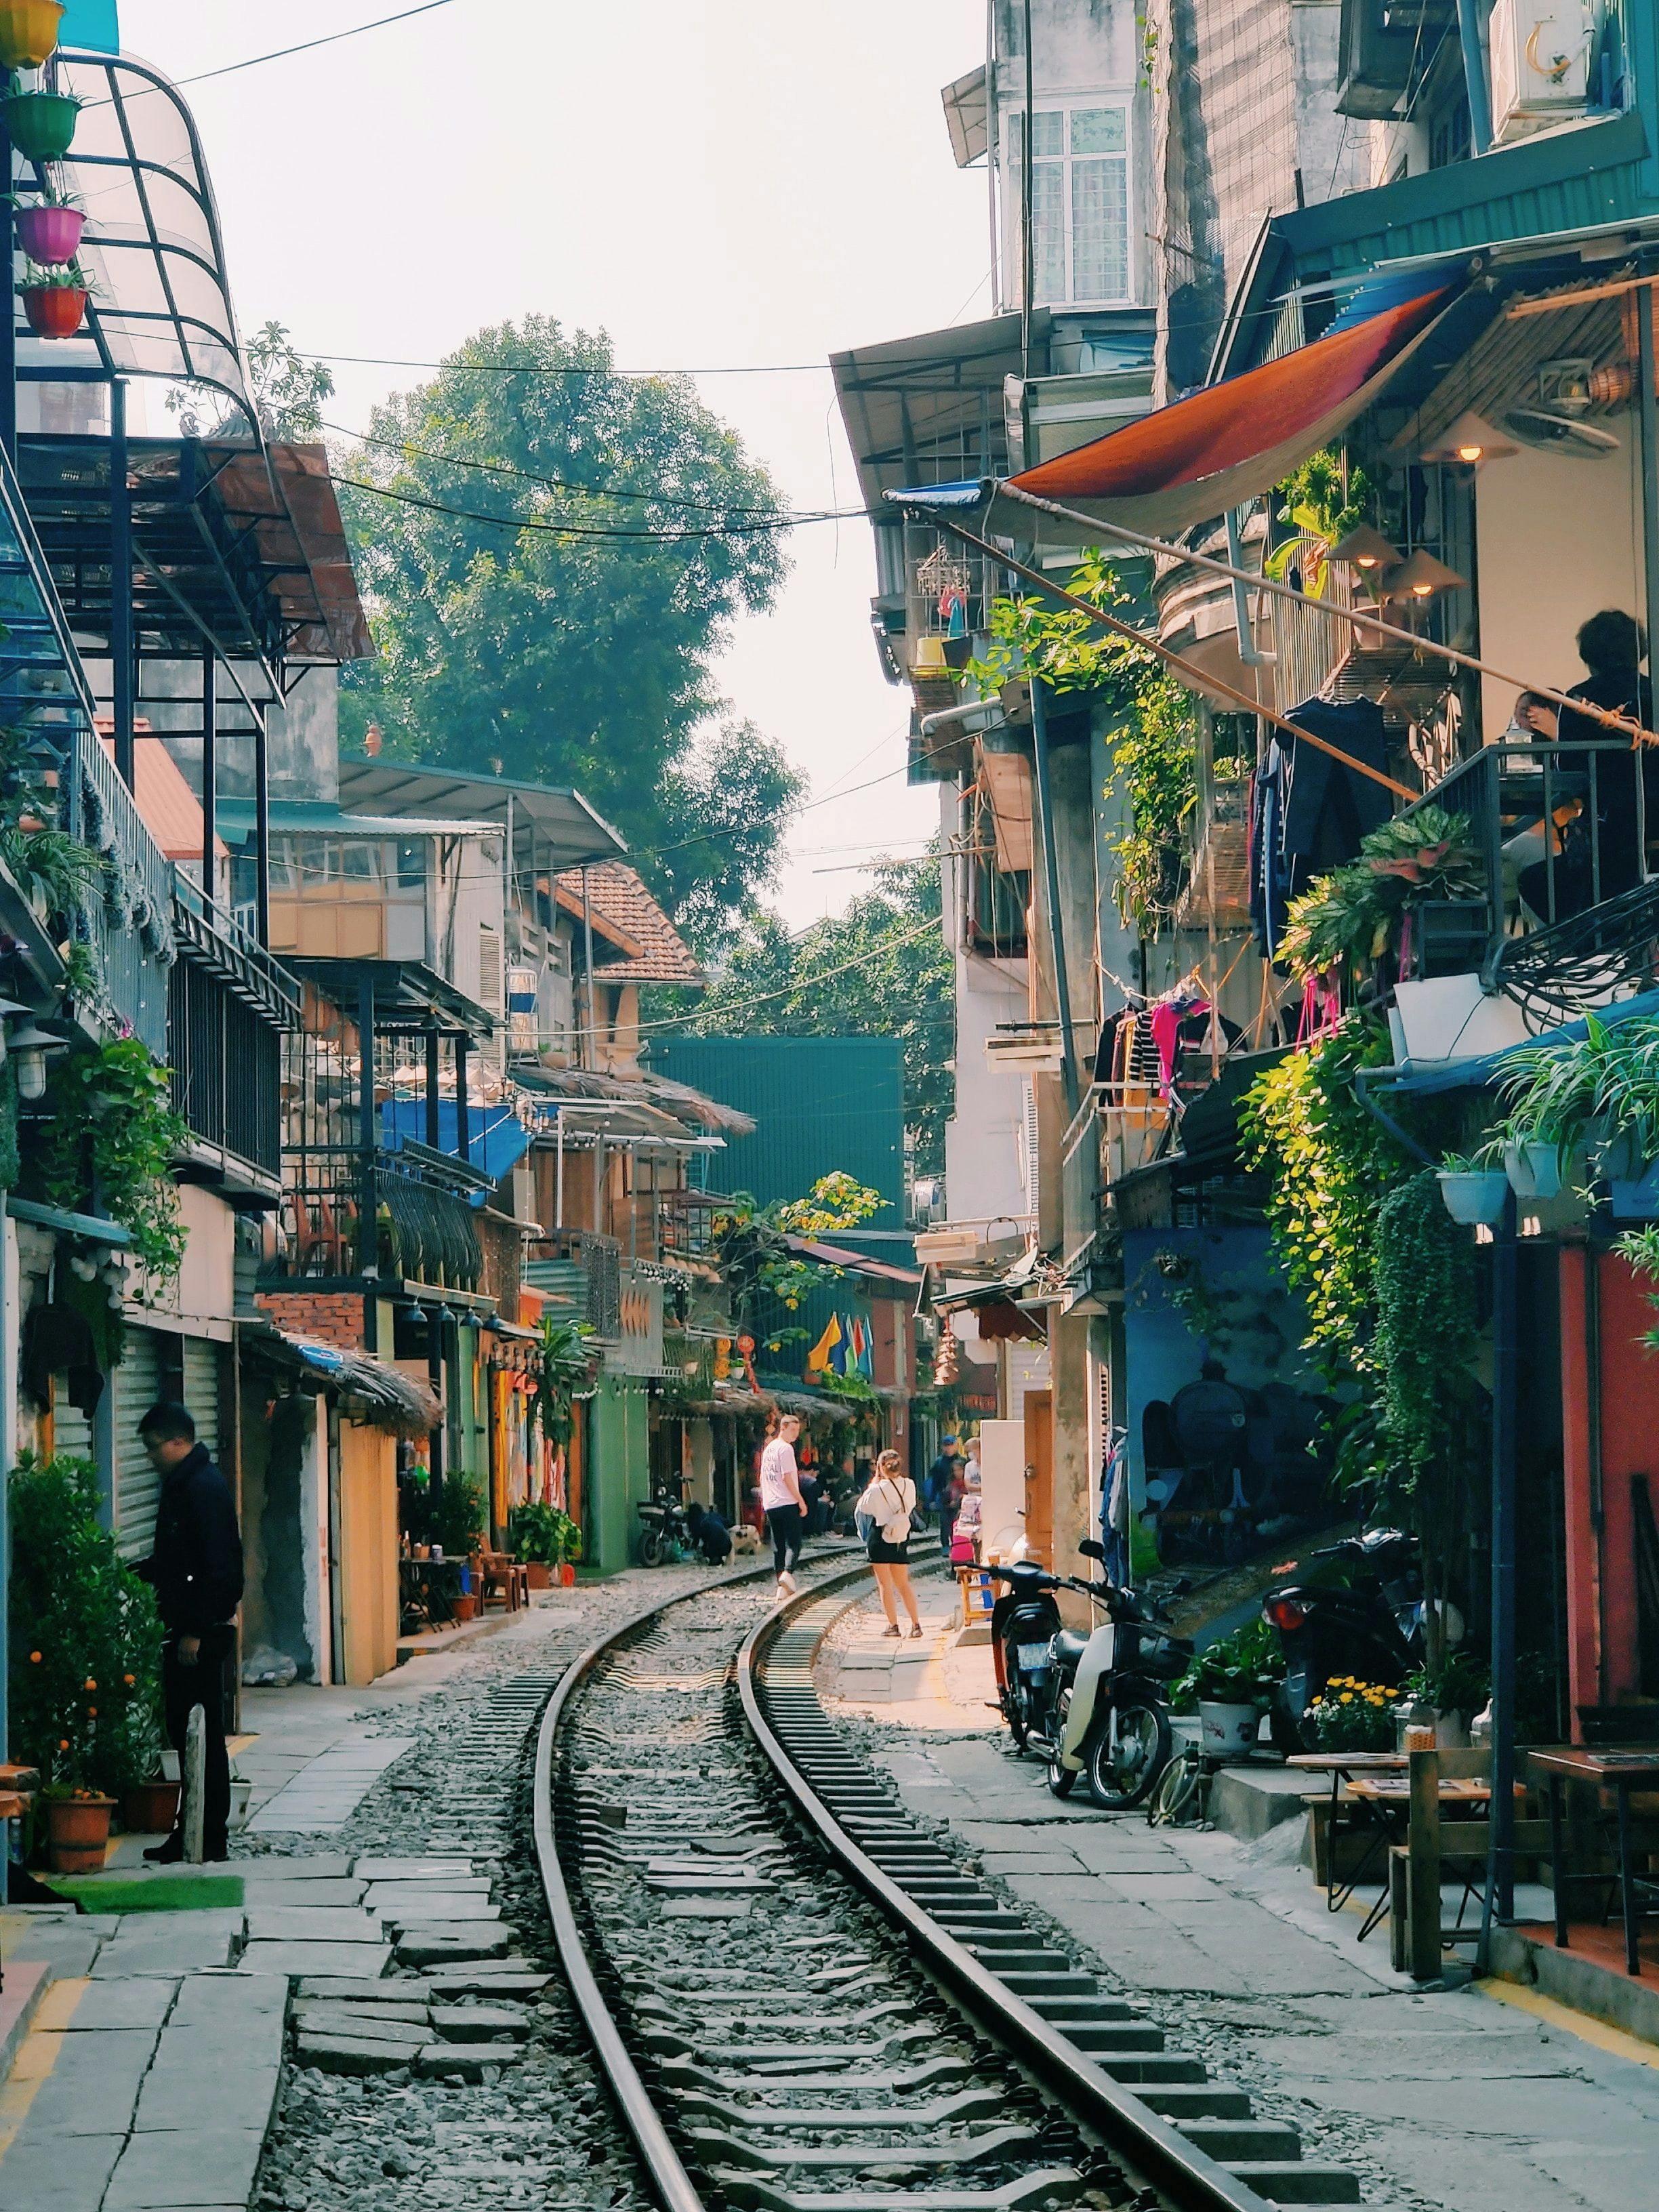 Train Street in Hanoi in Vietnam.